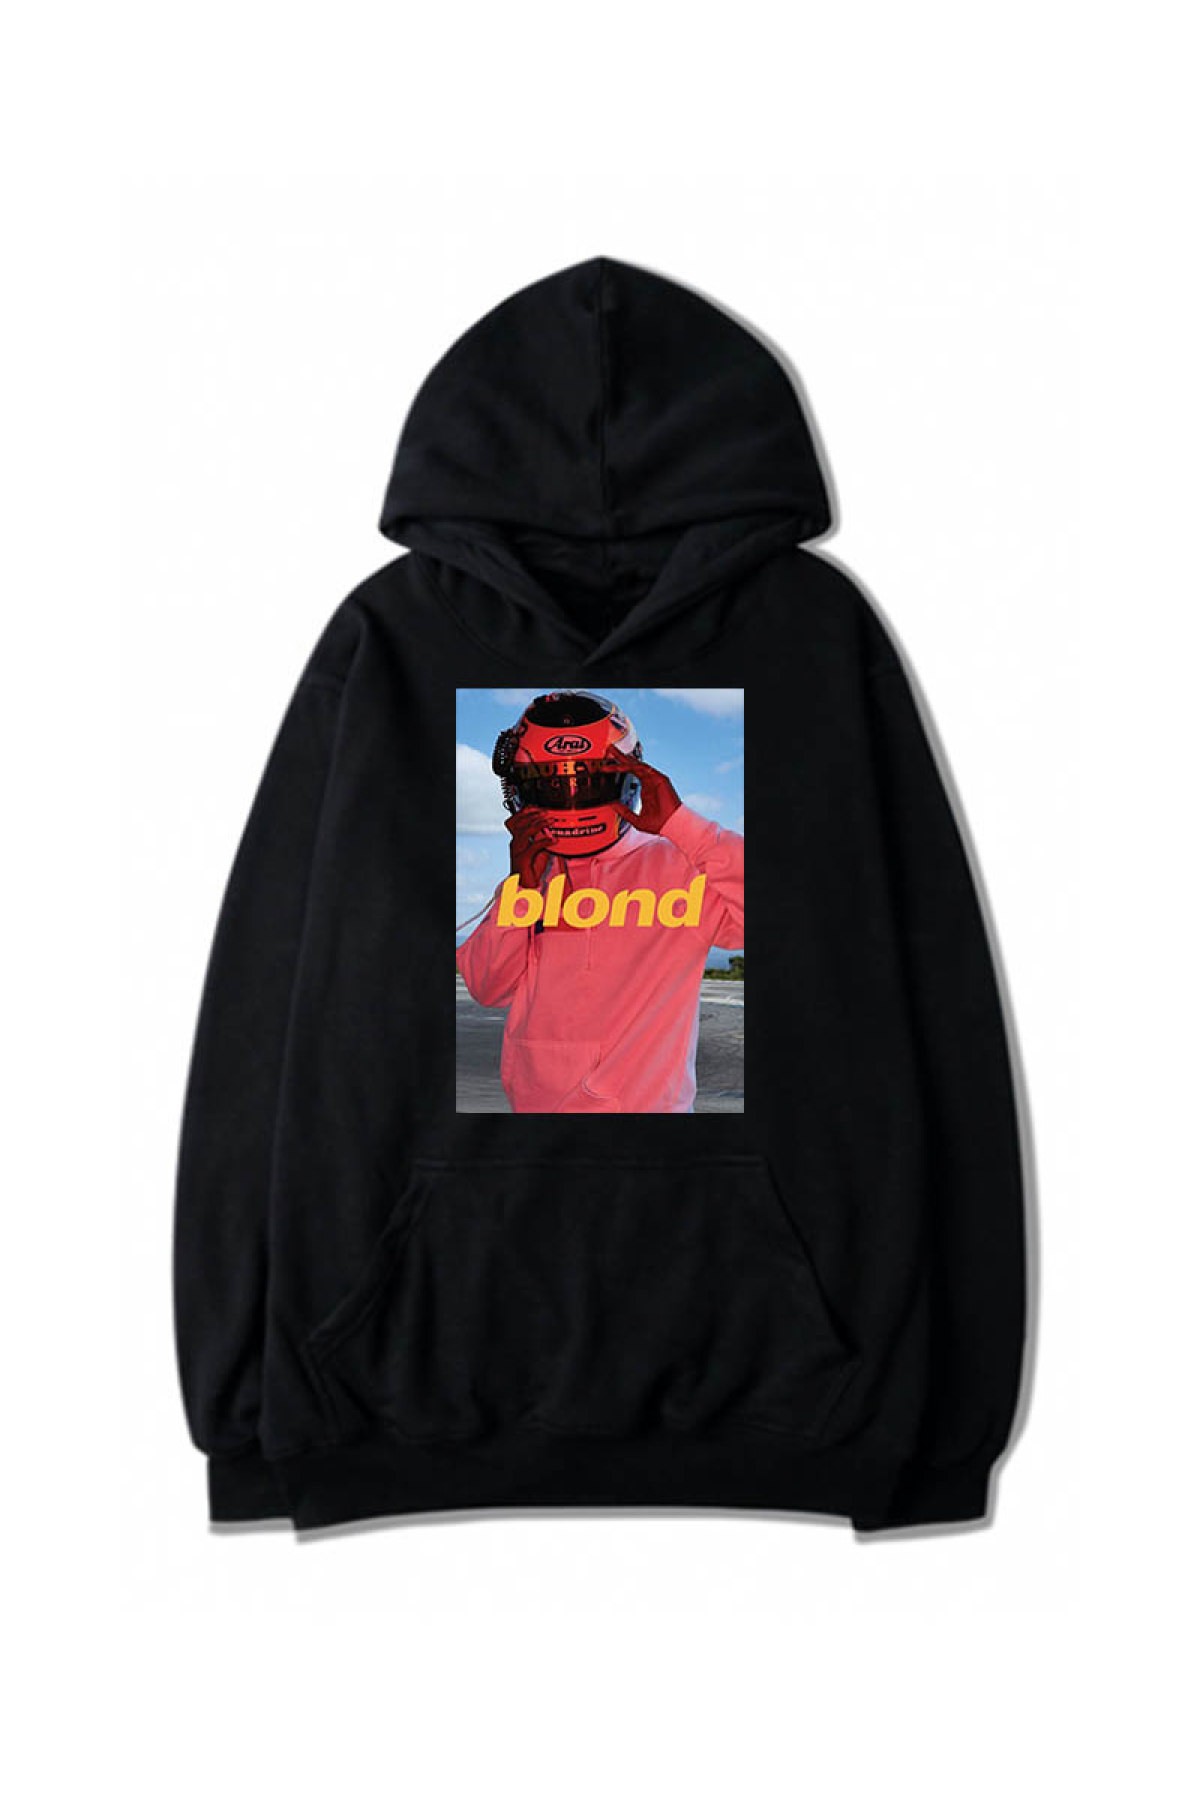 Frank Ocean Blond Sweatshirt